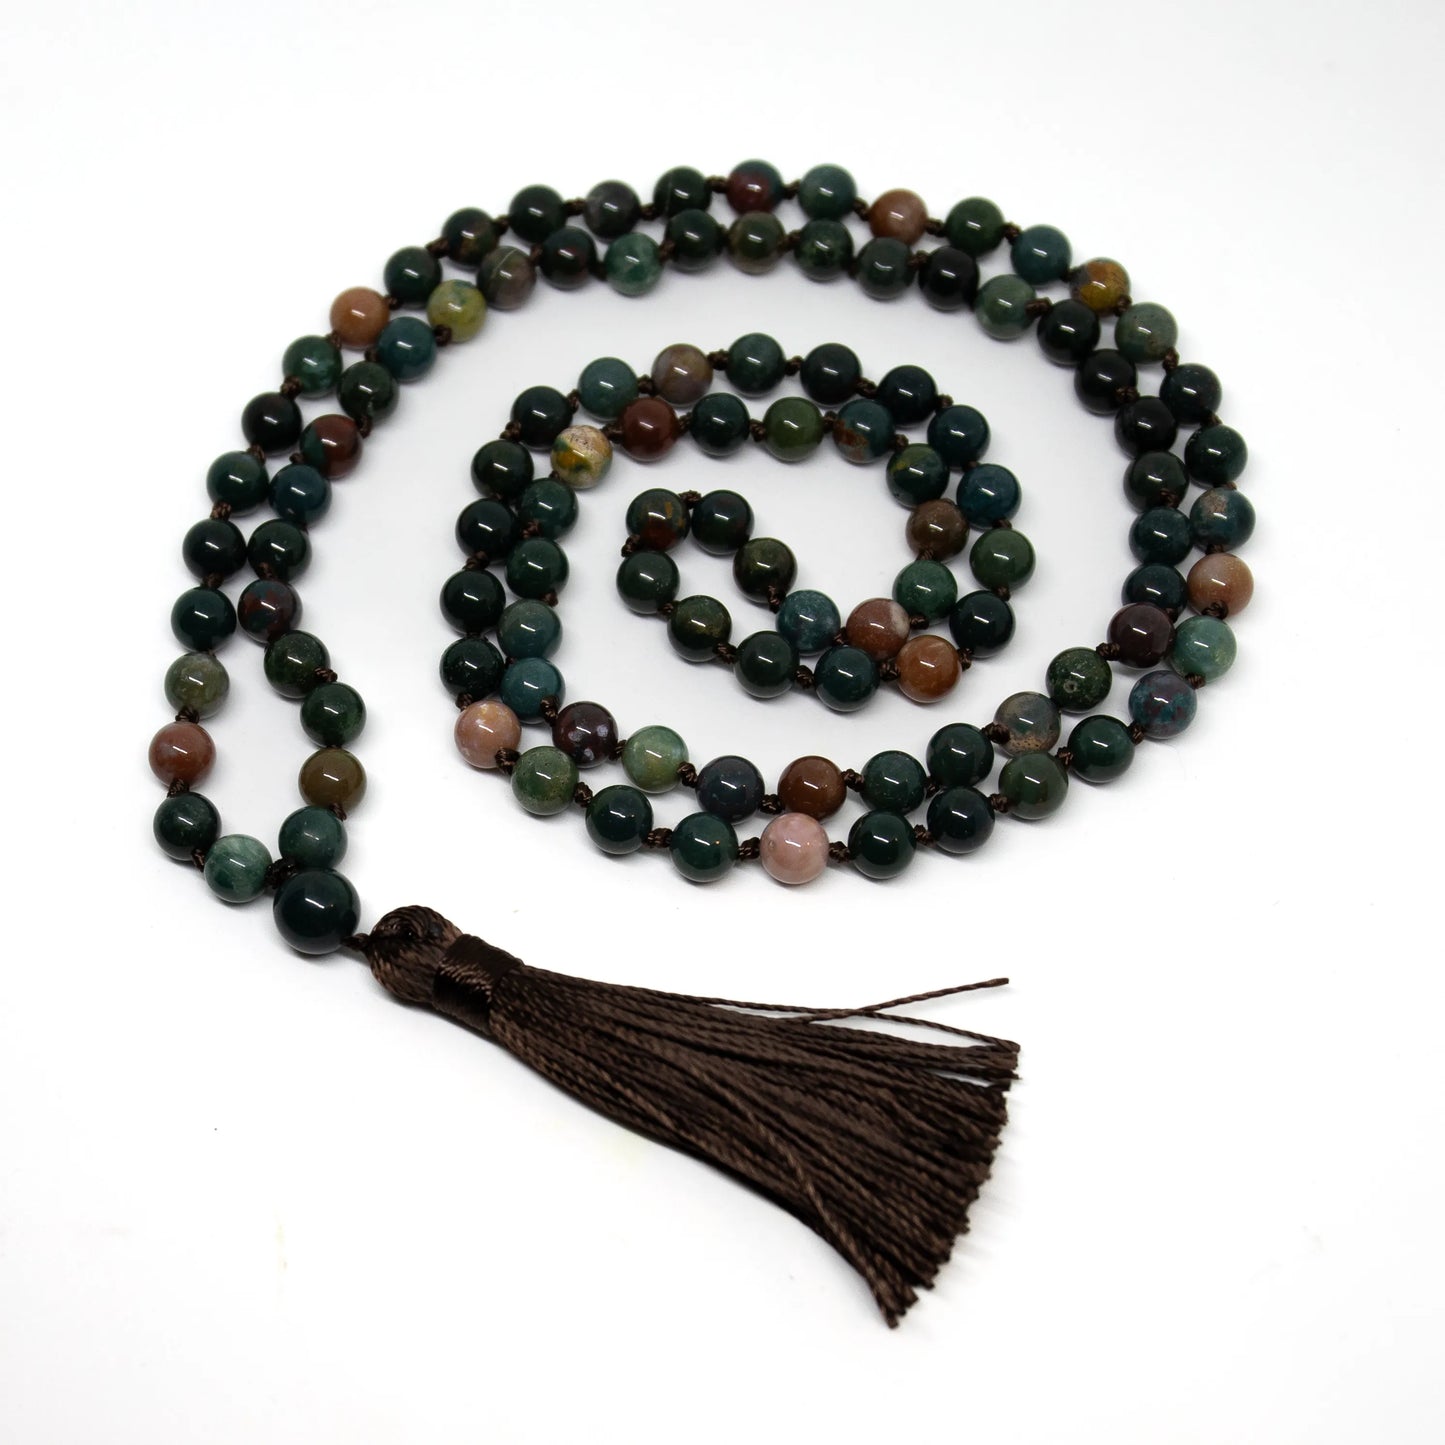 Bloodstone Knotted 108 Bead Mala - Prayer Beads - 8mm (1 Pack)